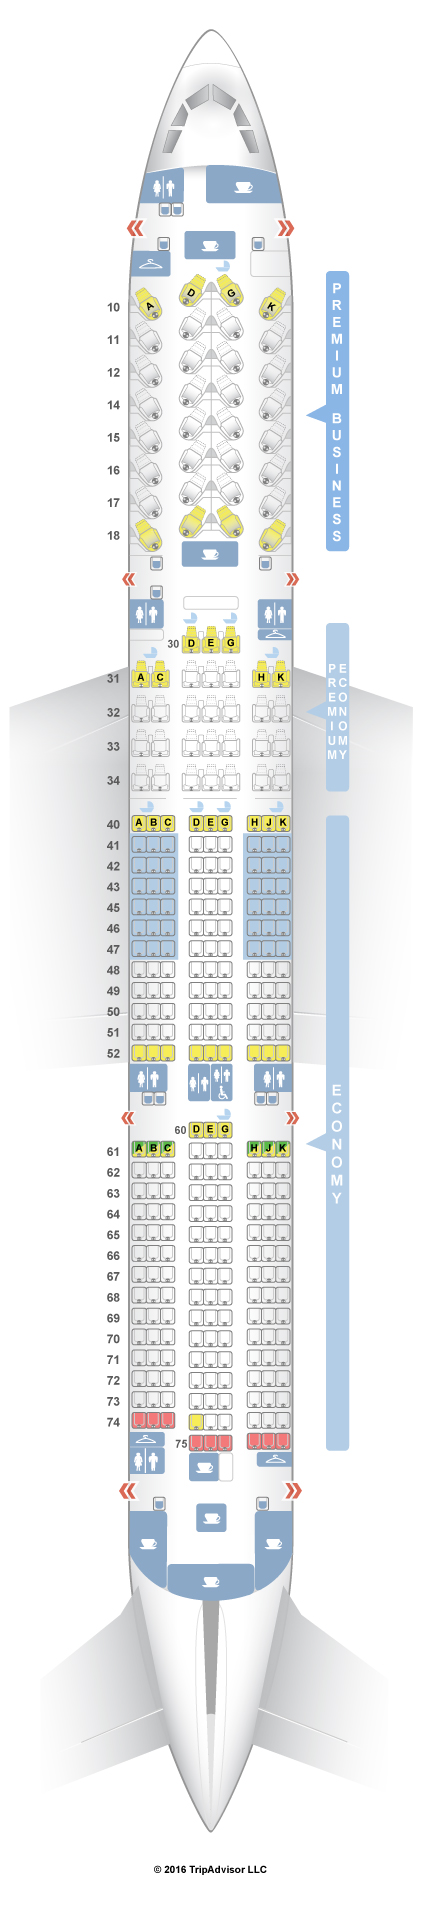 Lufthansa 359 Seating Chart